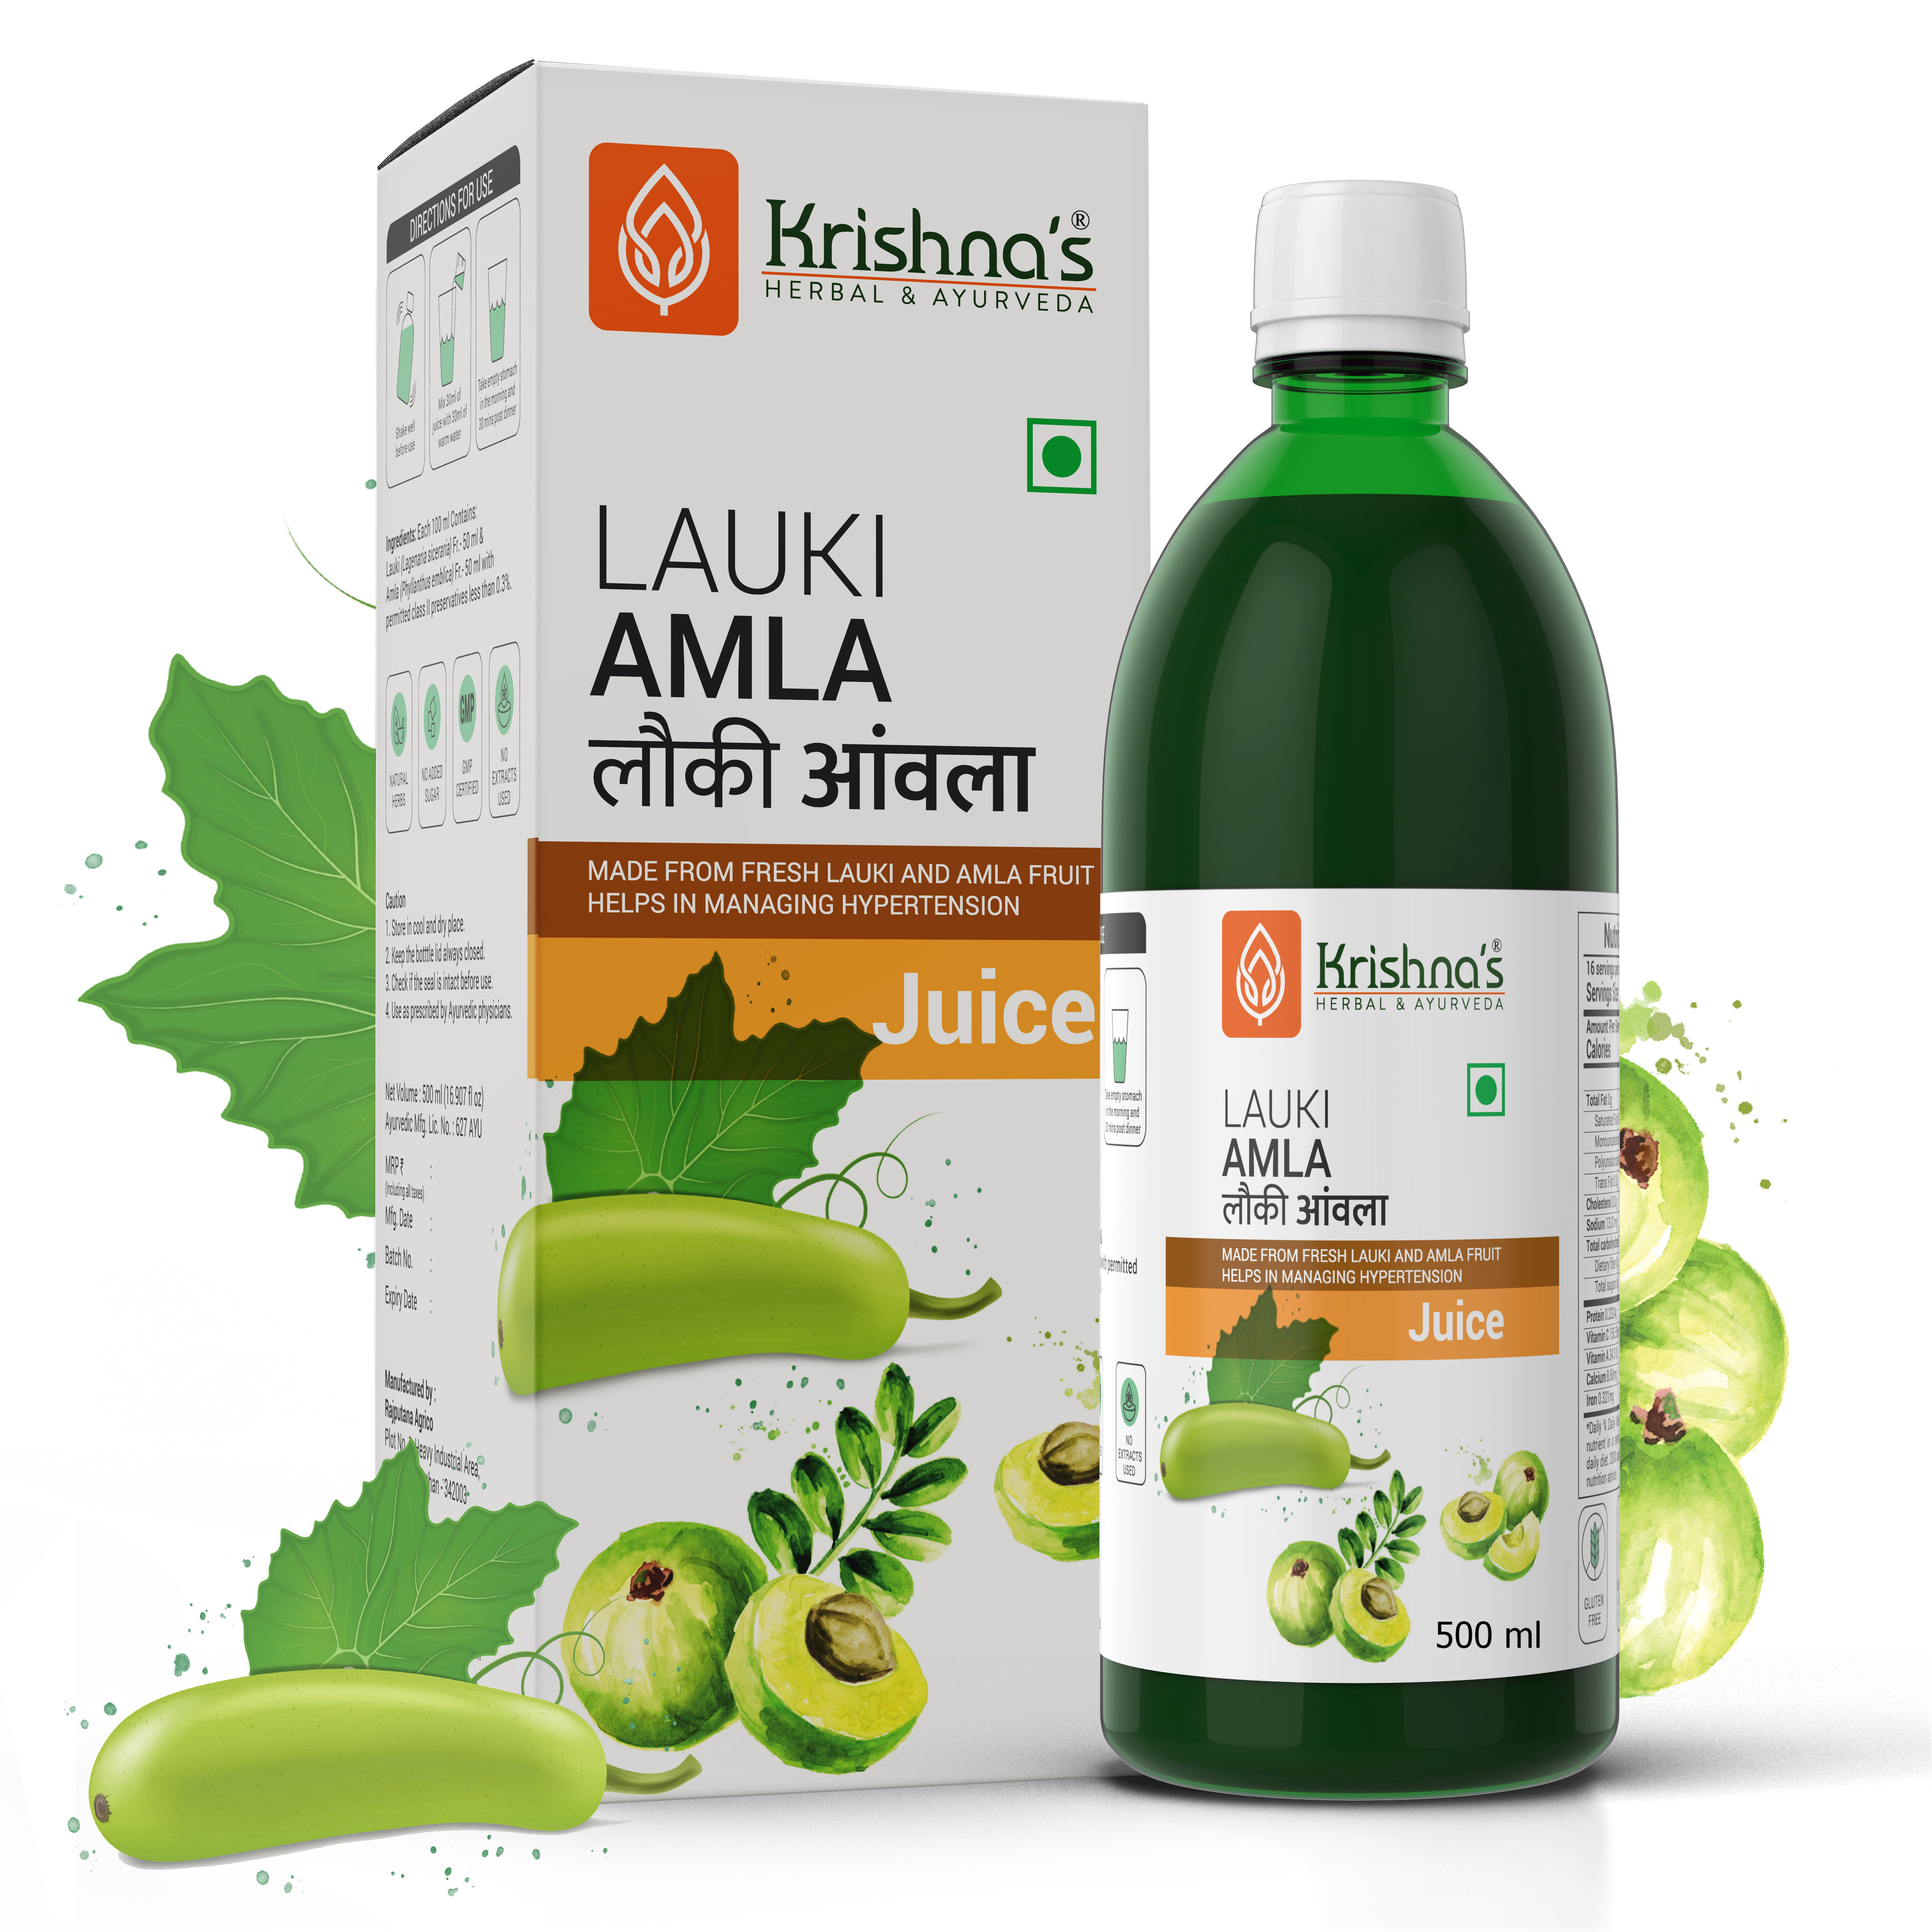 Buy Krishna Herbal Lauki Amla Juice at Best Price Online